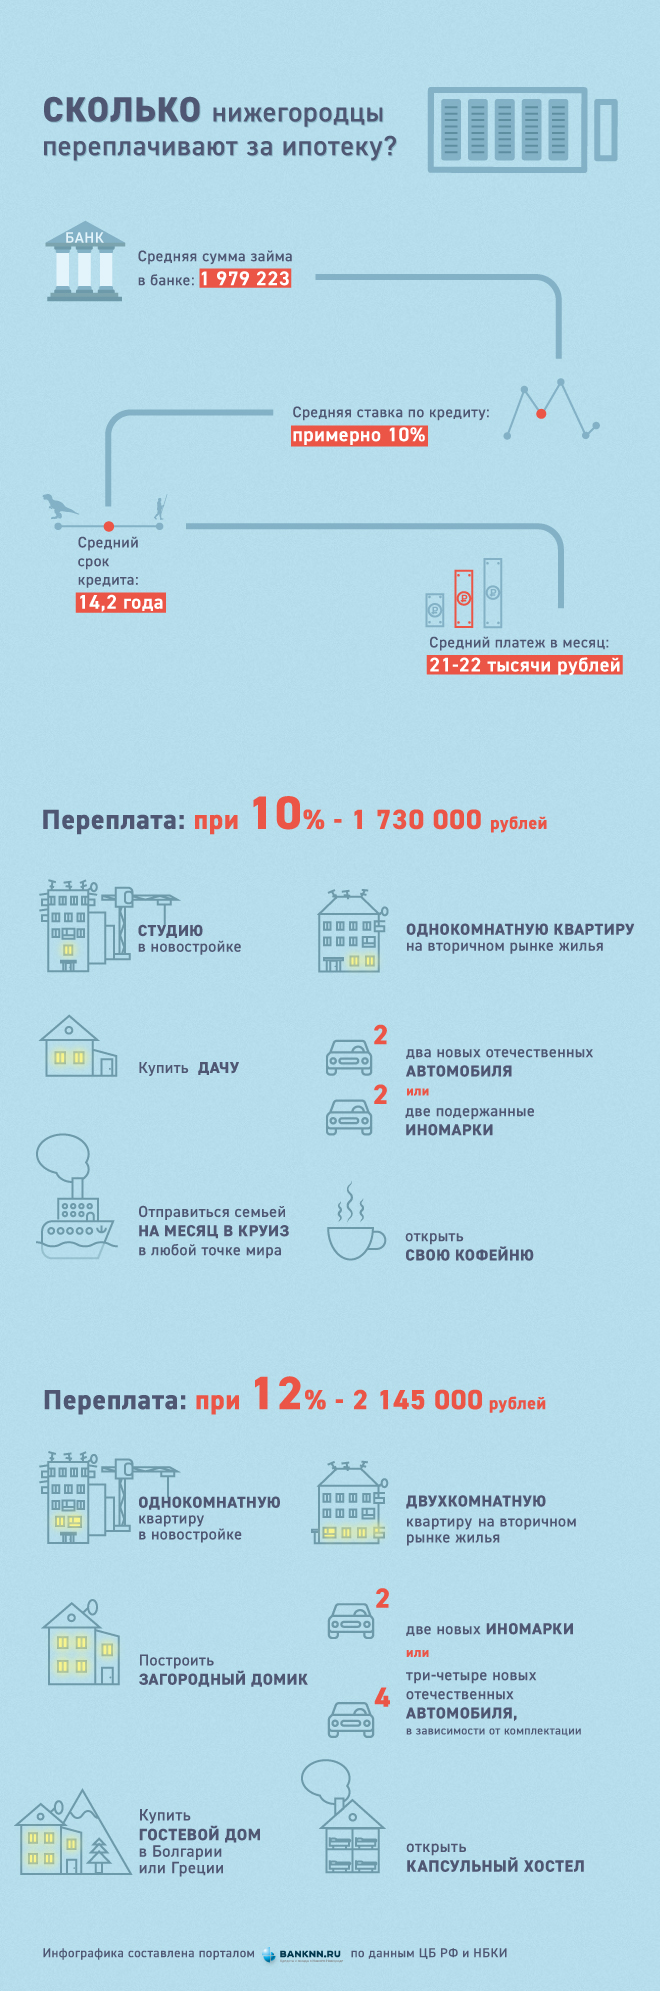 инфографика BankNN.ru